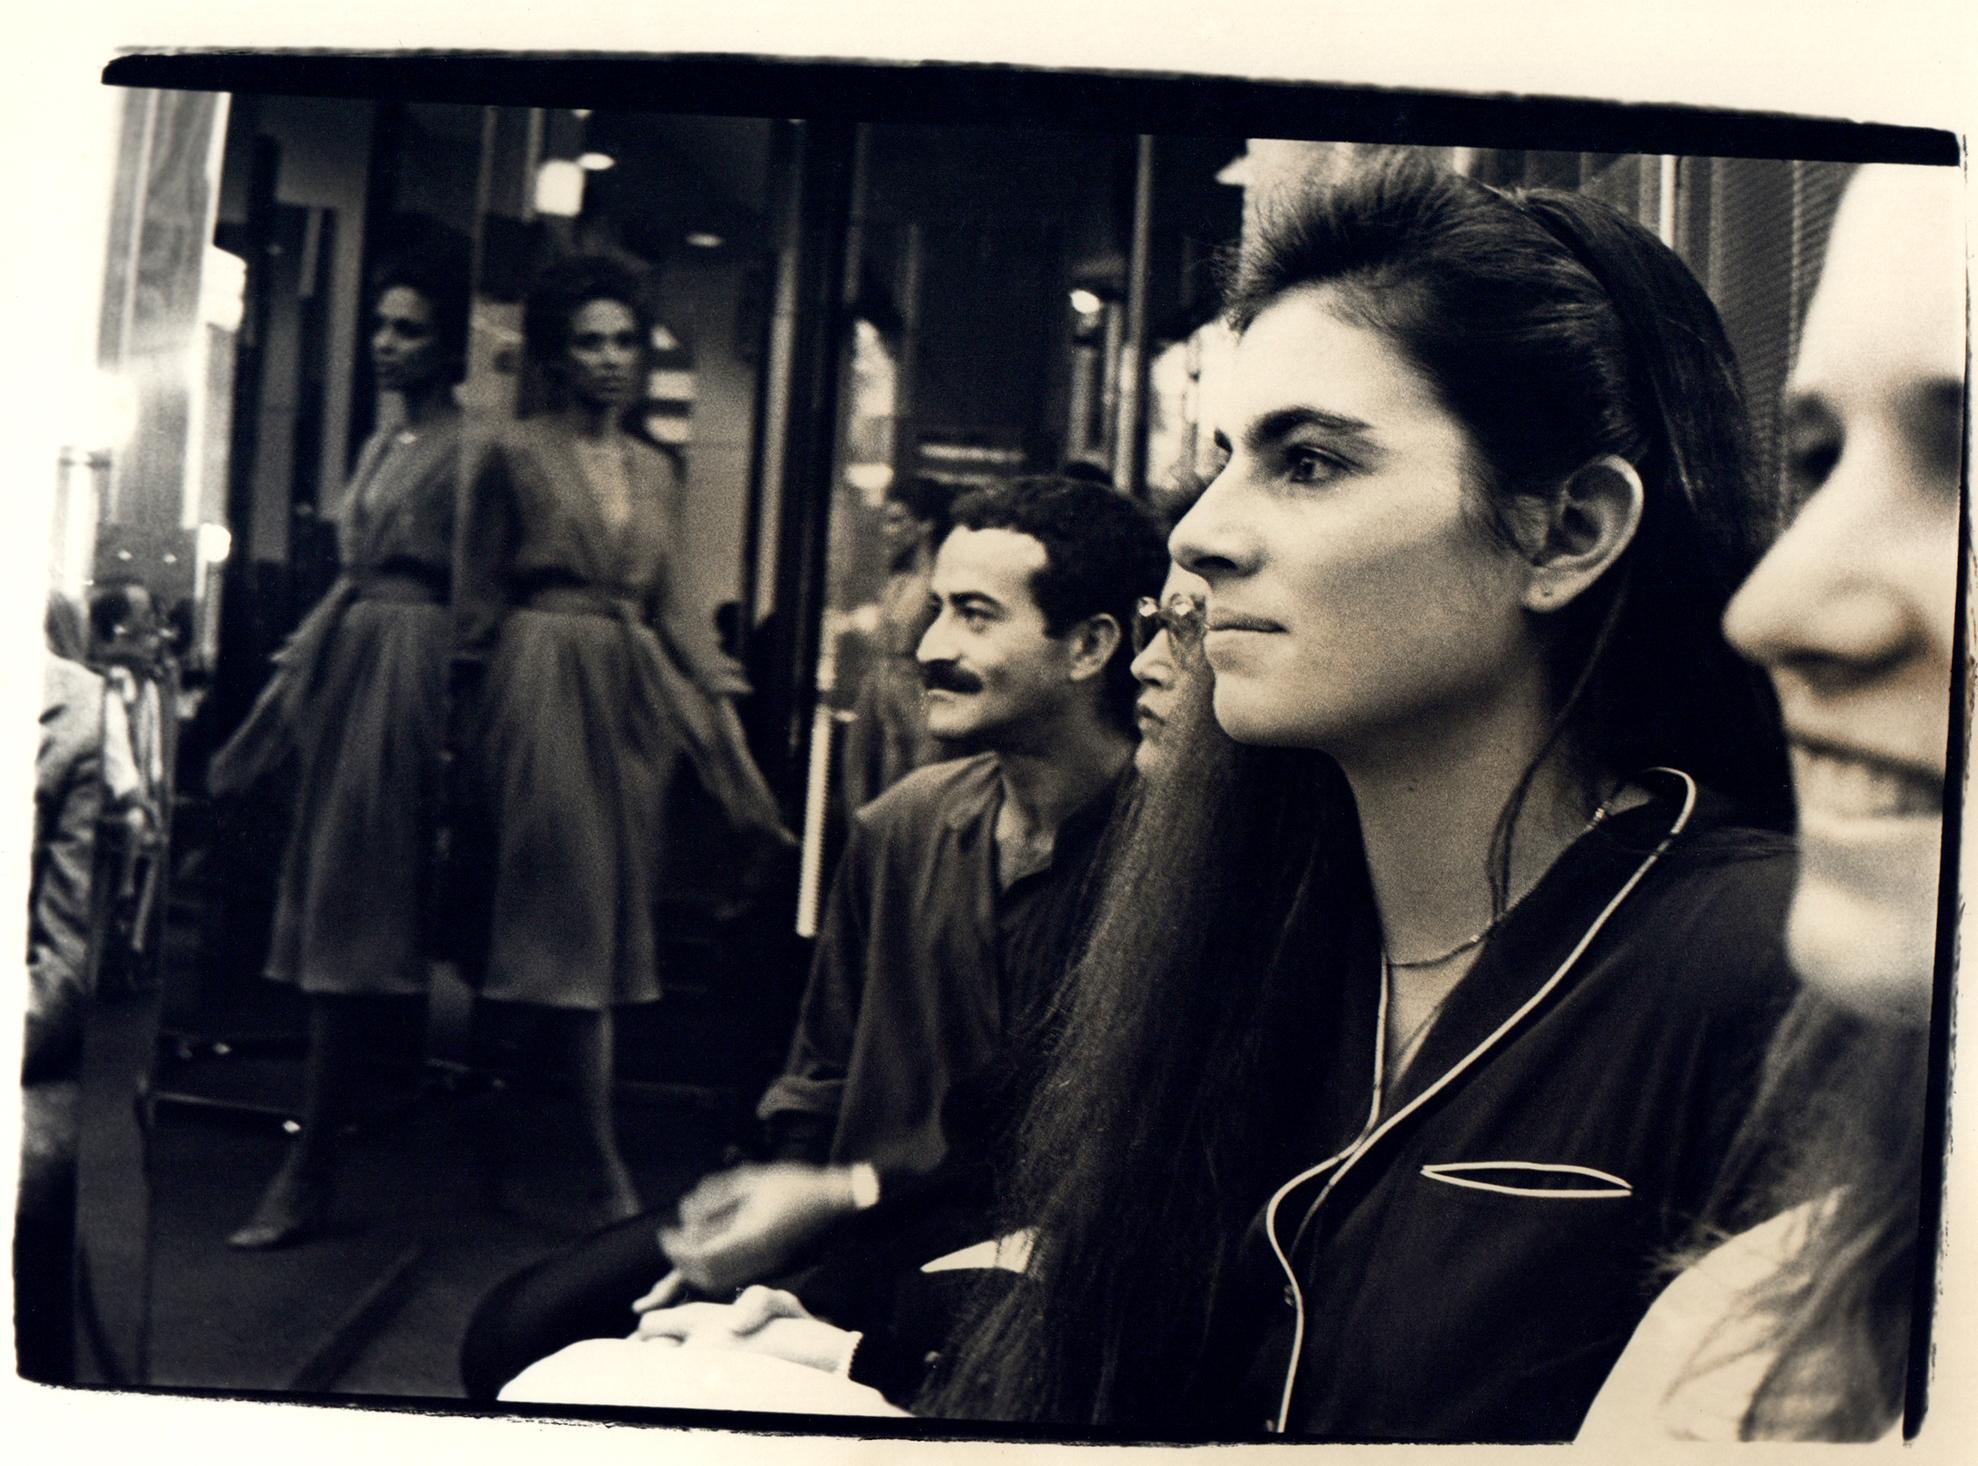 Andy Warhol Portrait Photograph - Victor Hugo, Mary Richardson, and a Woman at Halston Fashion Show